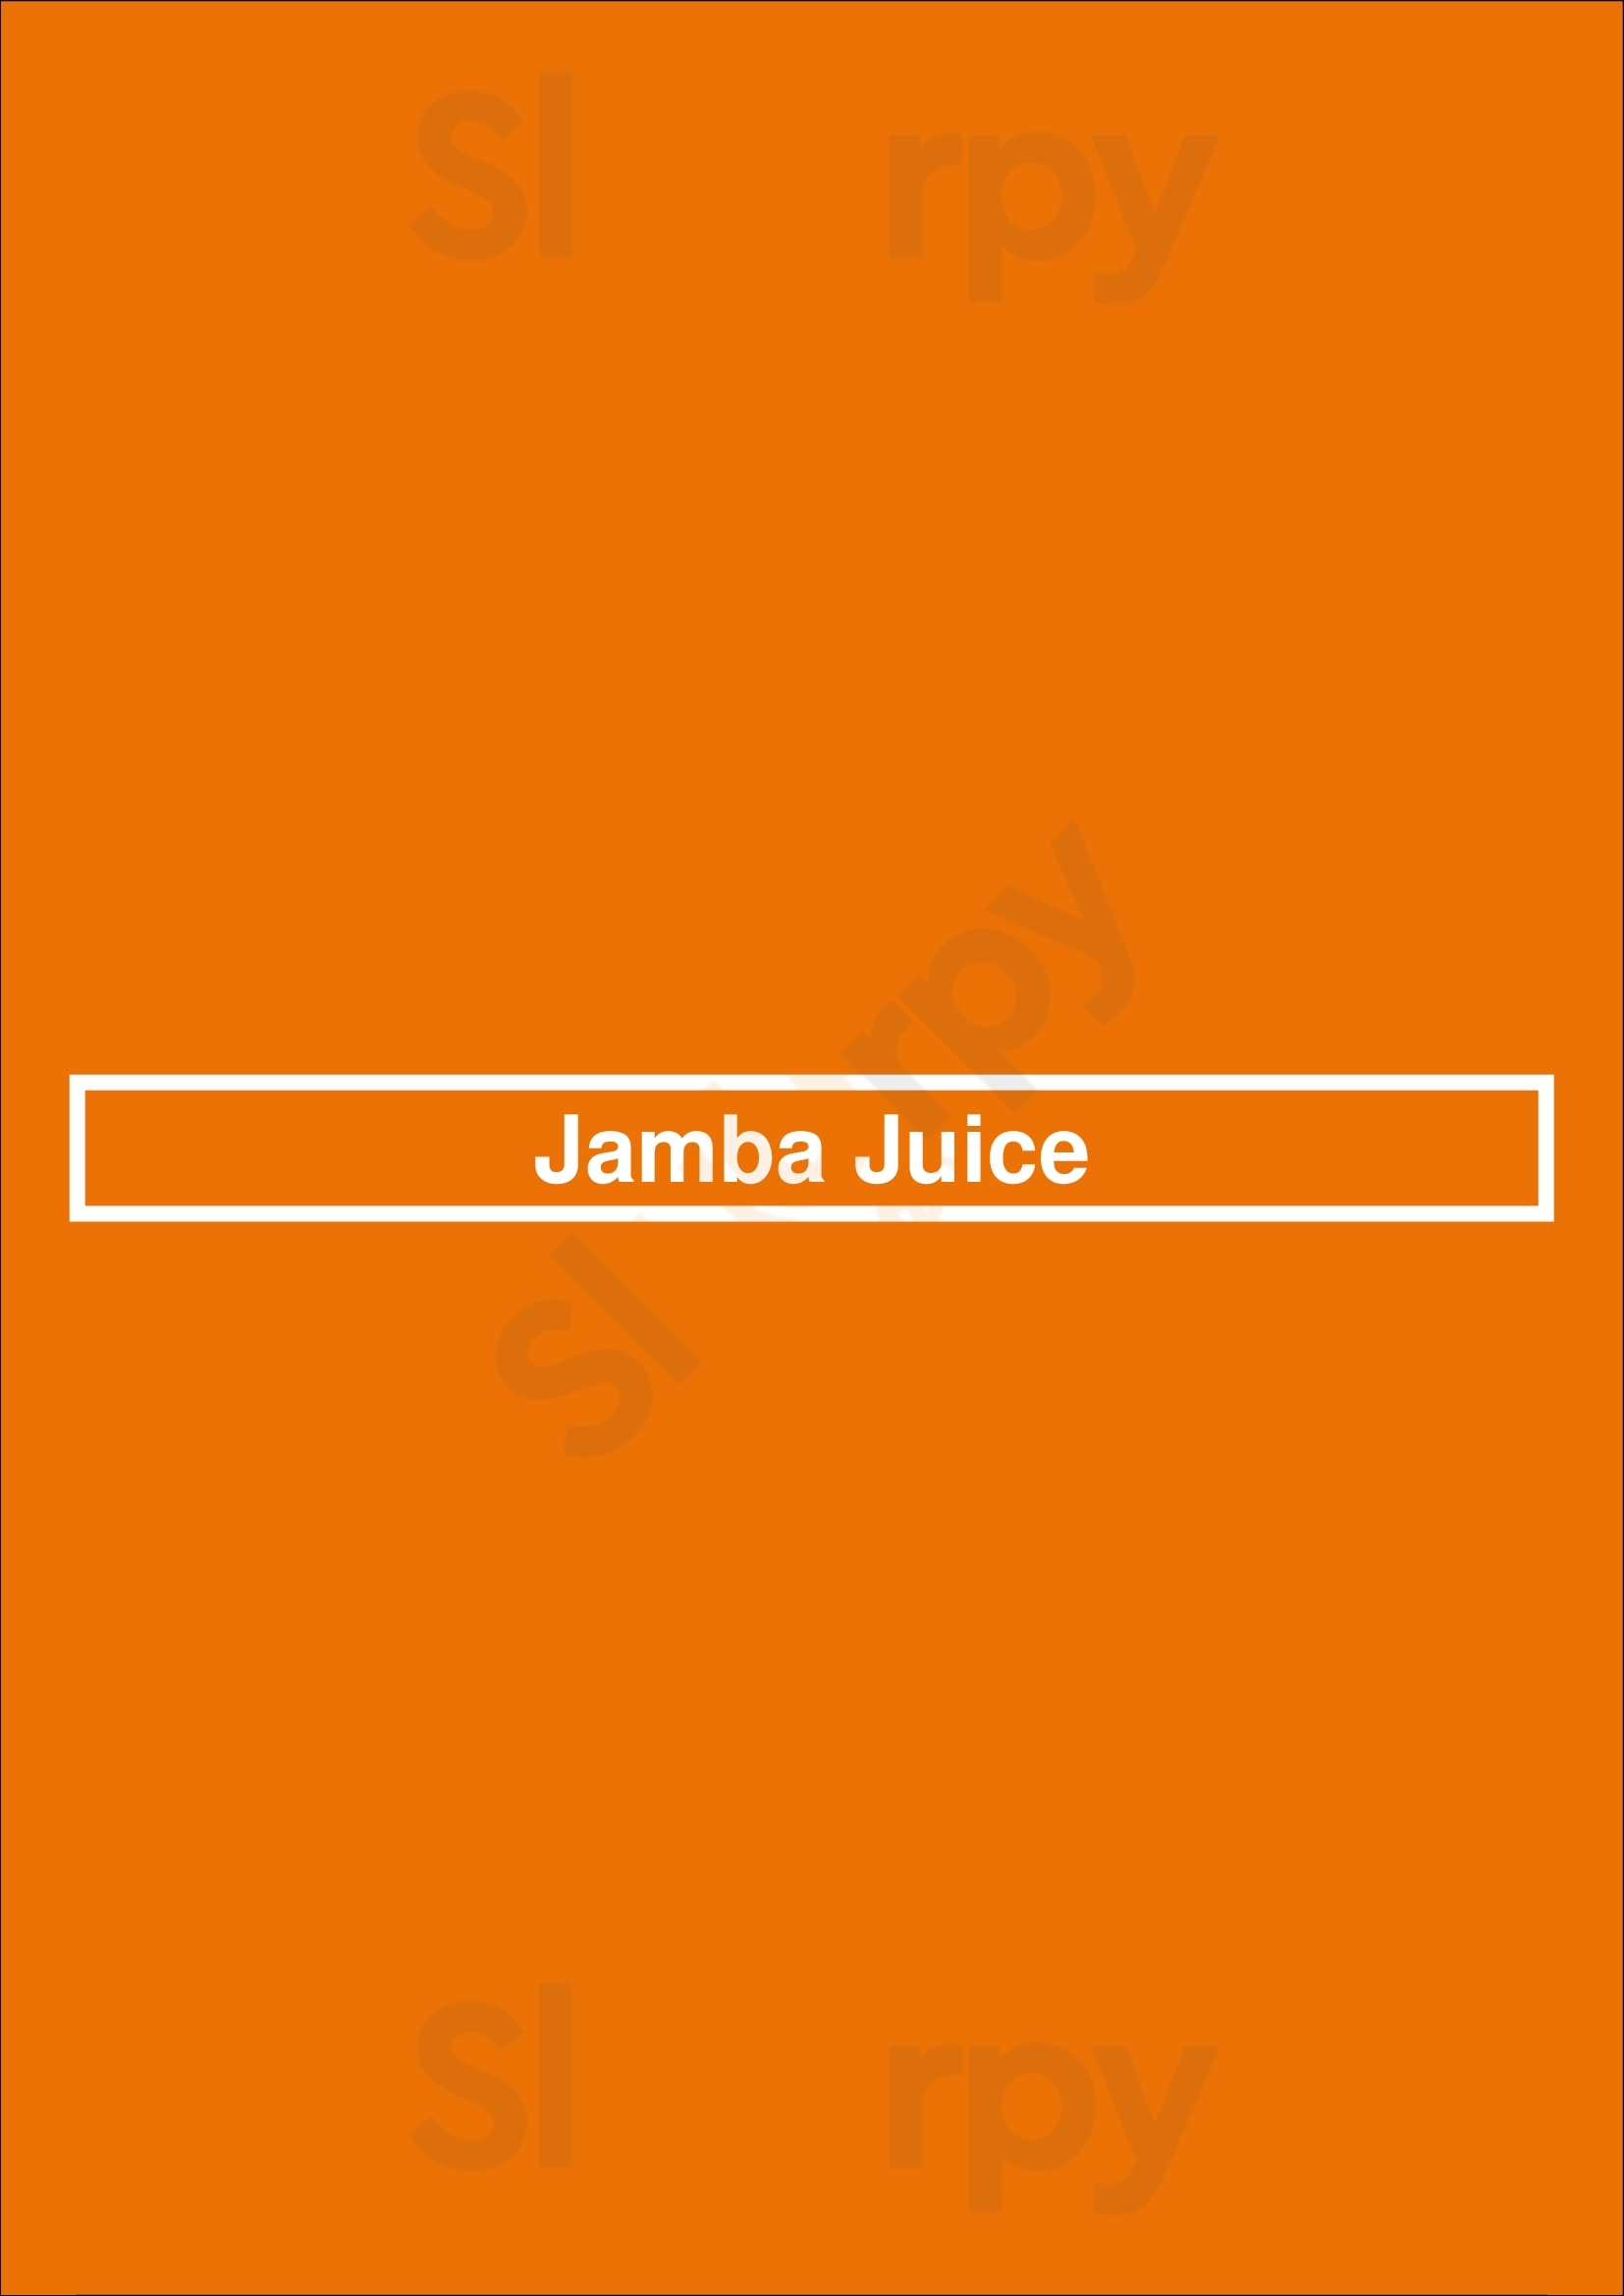 Jamba Juice Los Angeles Menu - 1